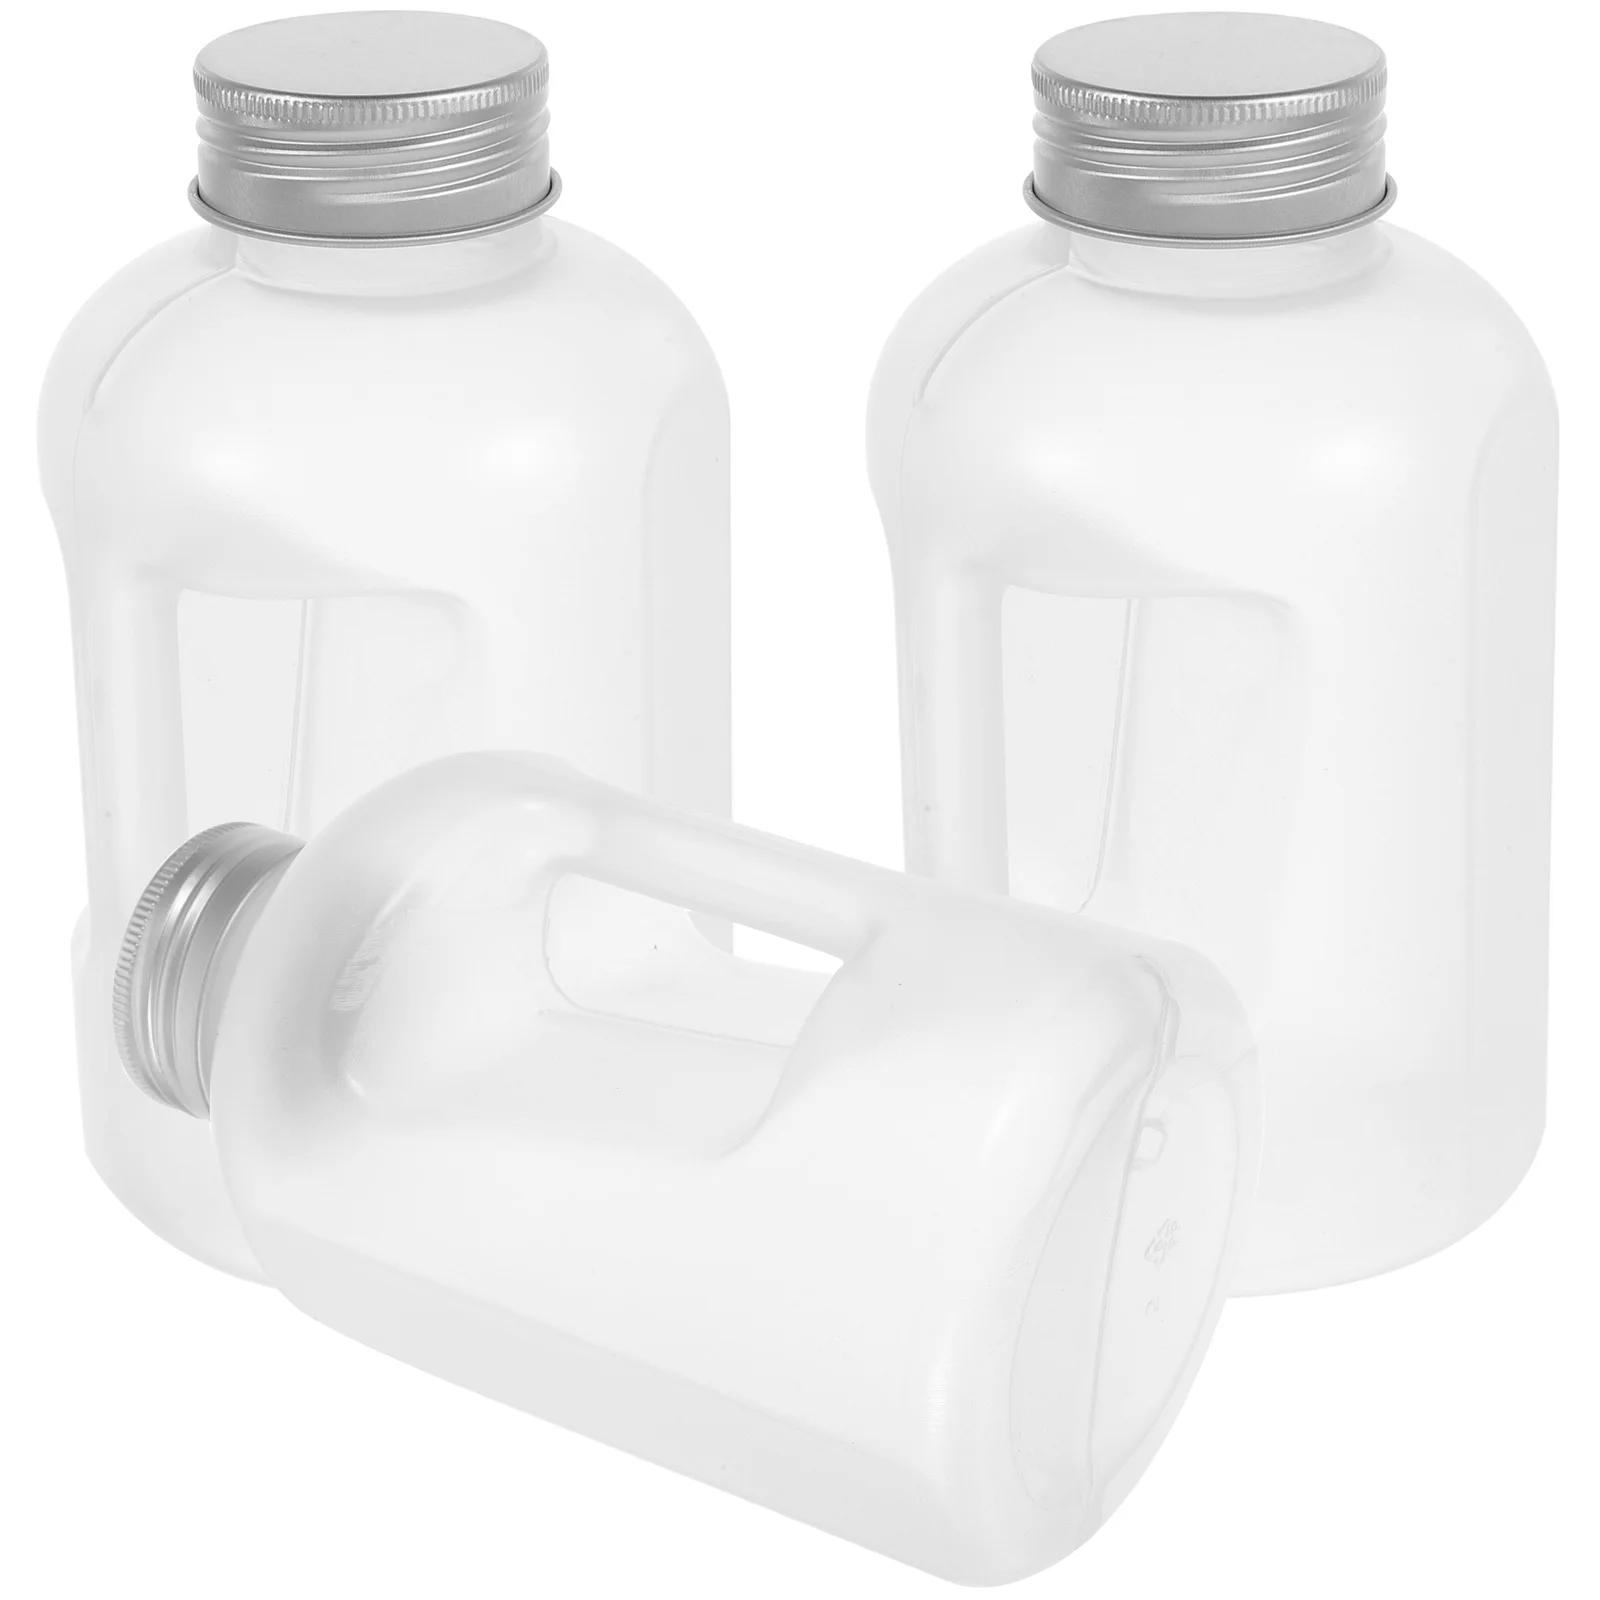 

3 Pcs Juice Bottle Plastic Bottles Empty Gallon Jugs Caps Milk Carton Water Storage Containers Tea Bucket Pp Clear Fridge